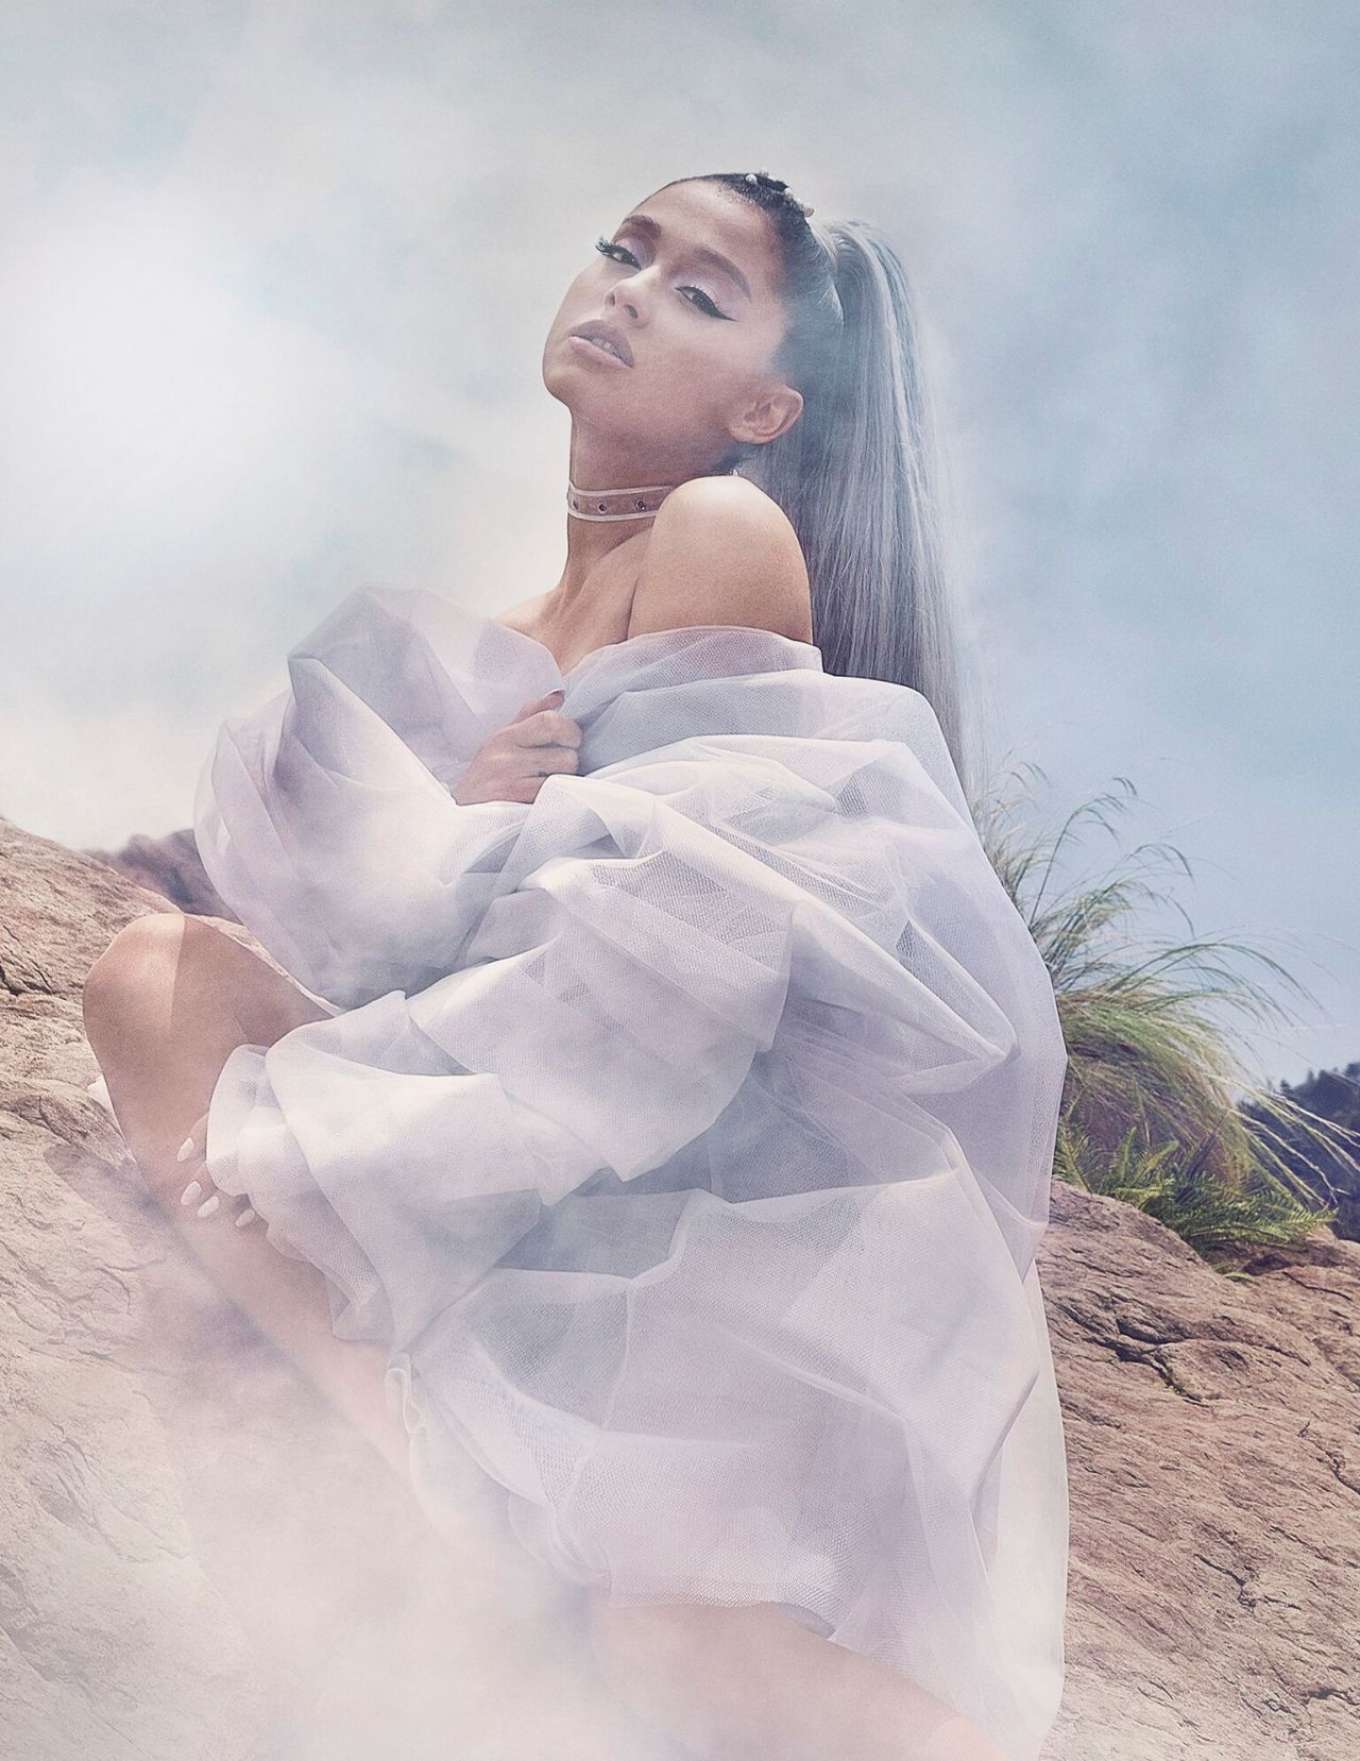 Ariana Grande â€“ â€˜Cloud by Ariana Grandeâ€™ Perfume 2018